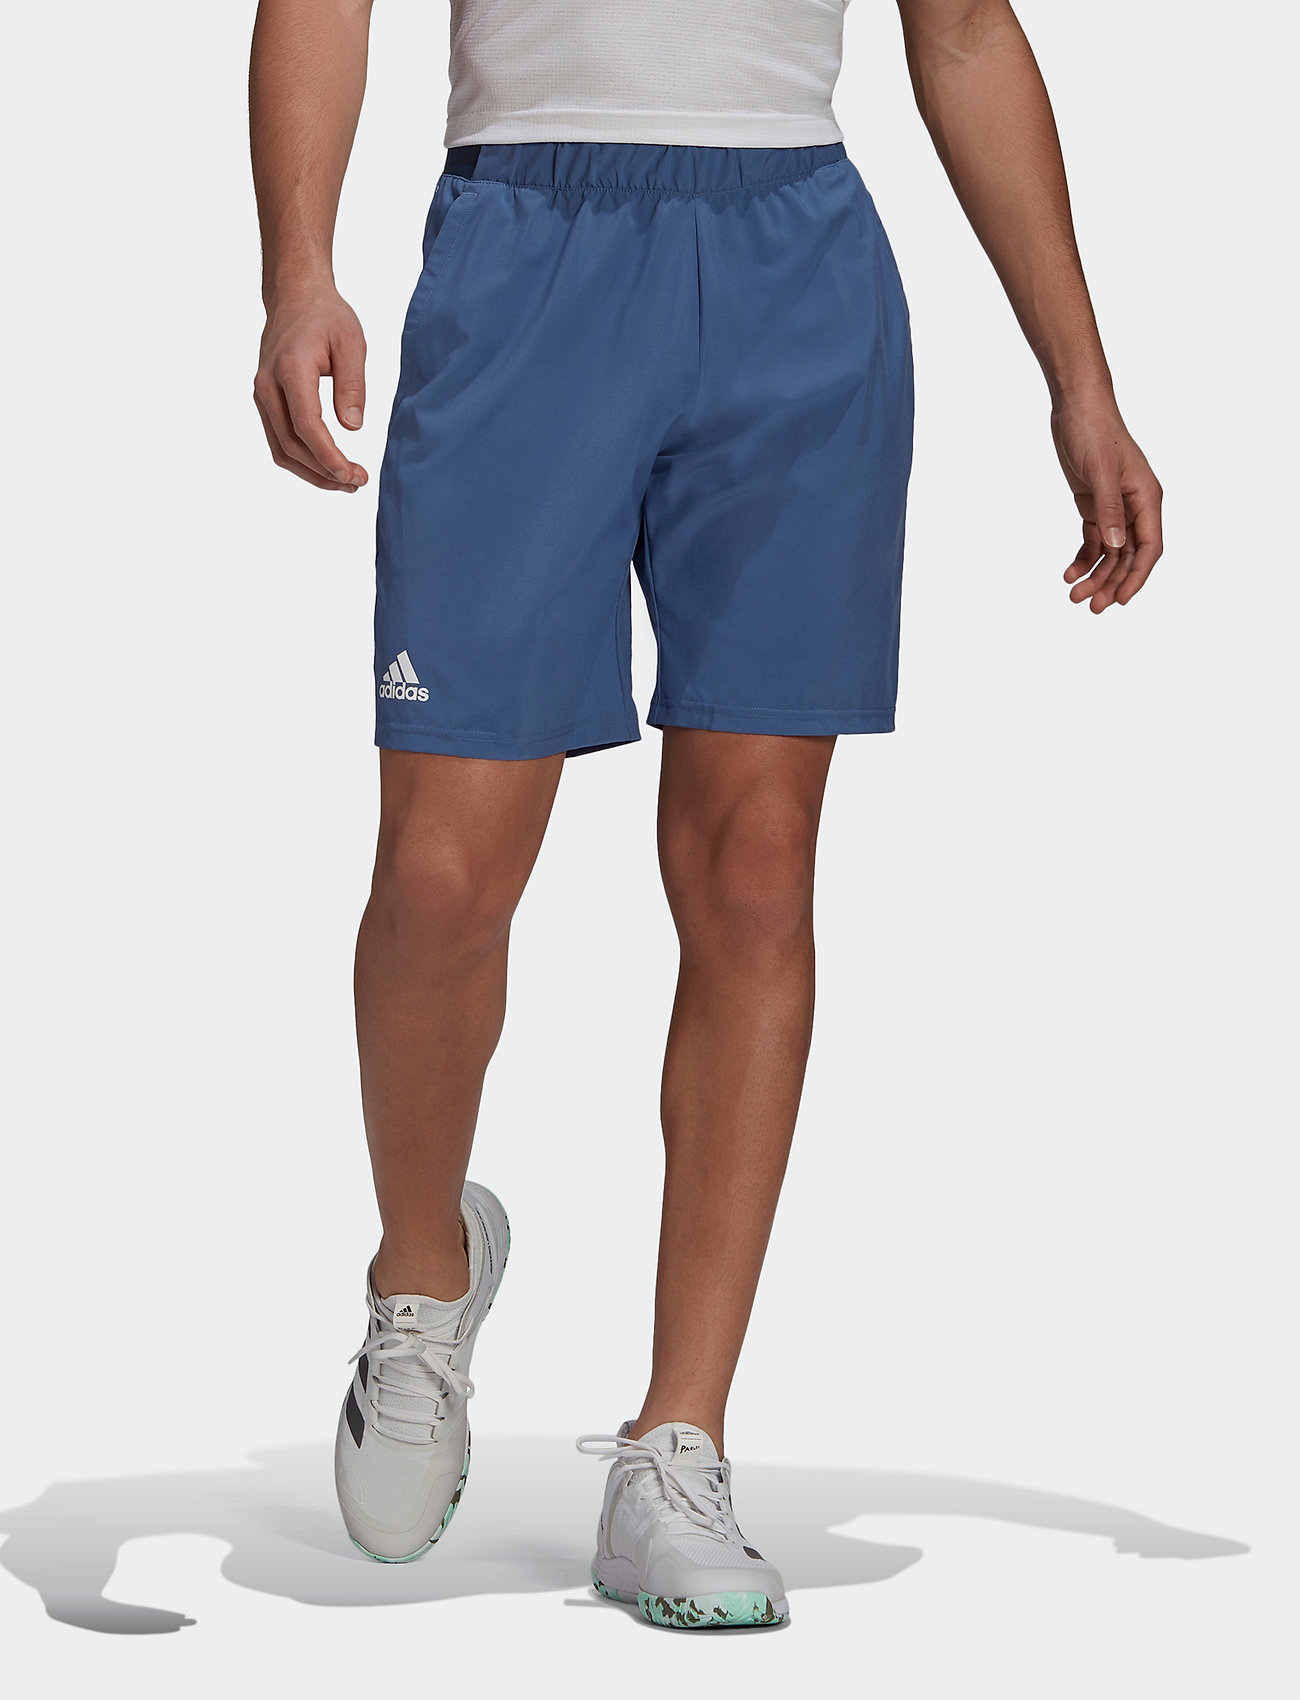 Short club. Adidas Club SW short. Мужские шорты адидас Climalite коллекция 2020 года серые.